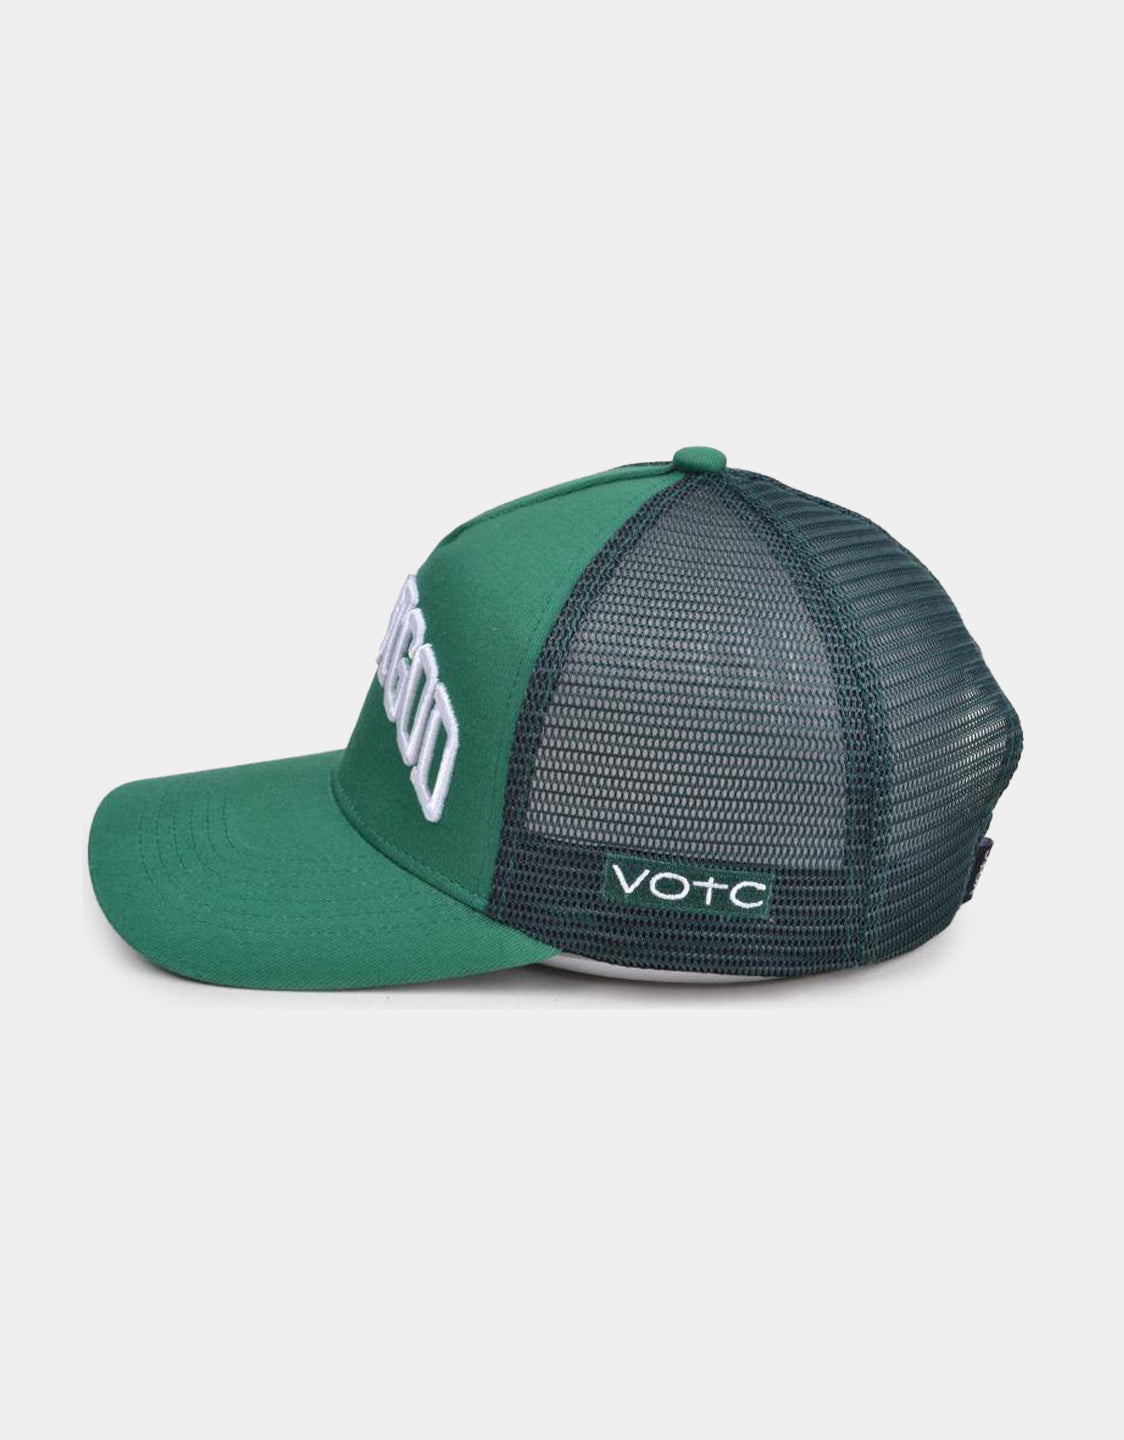 Trust God Premium Trucker Hat - Forest Green - VOTC Clothing